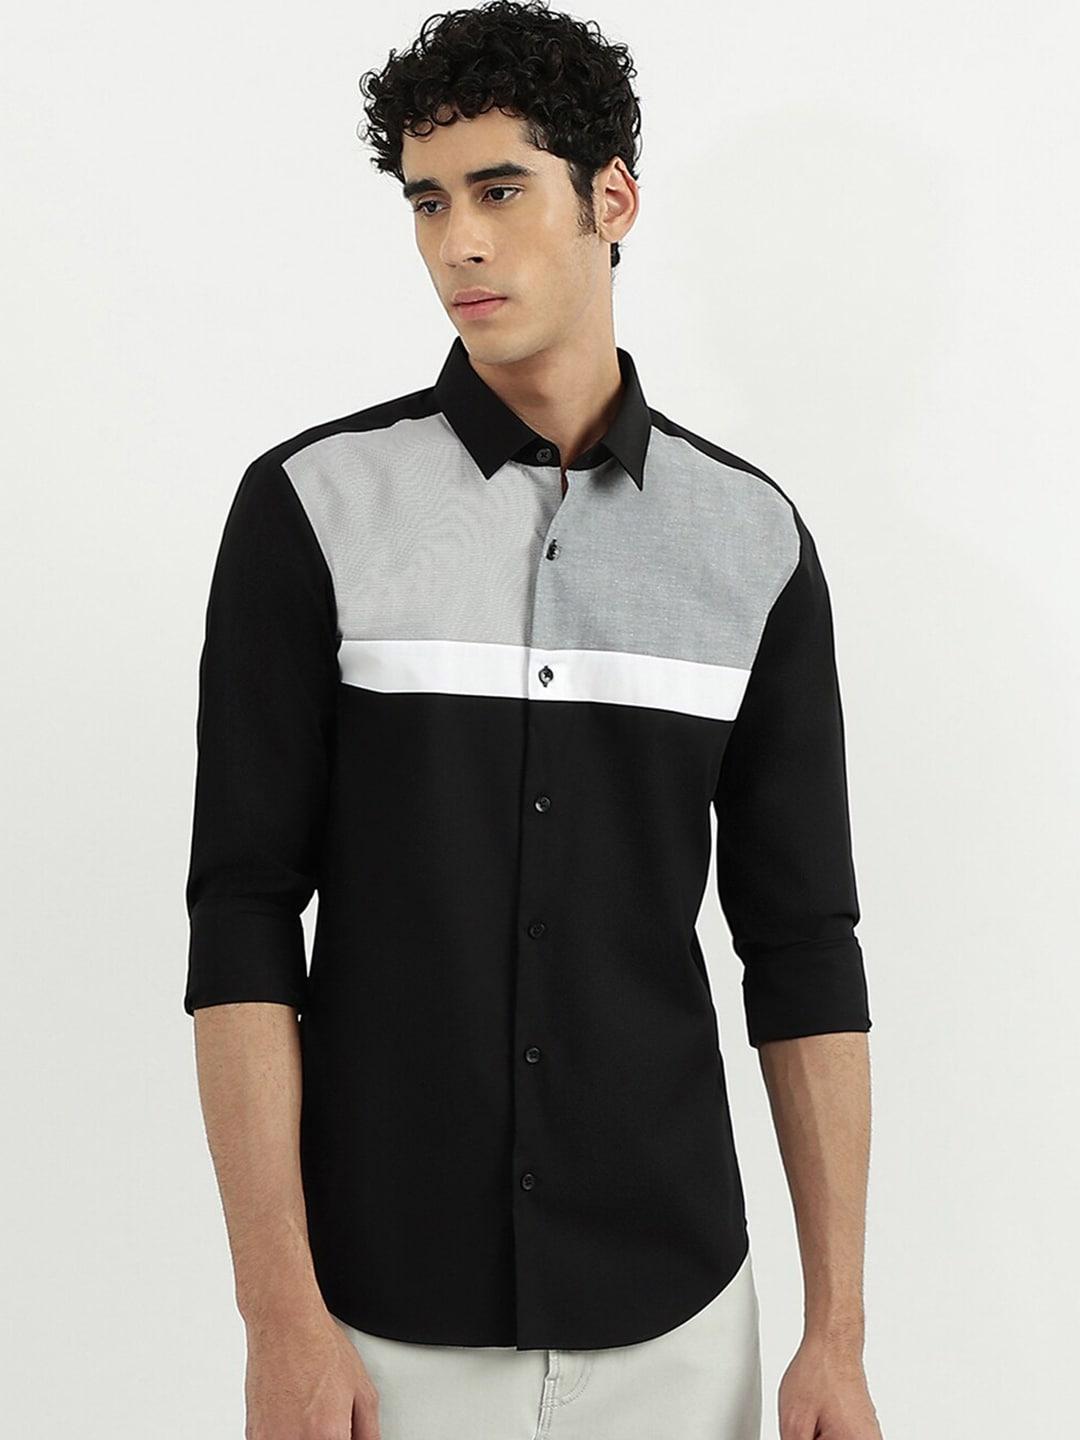 united colors of benetton men grey & black slim fit colourblocked casual shirt